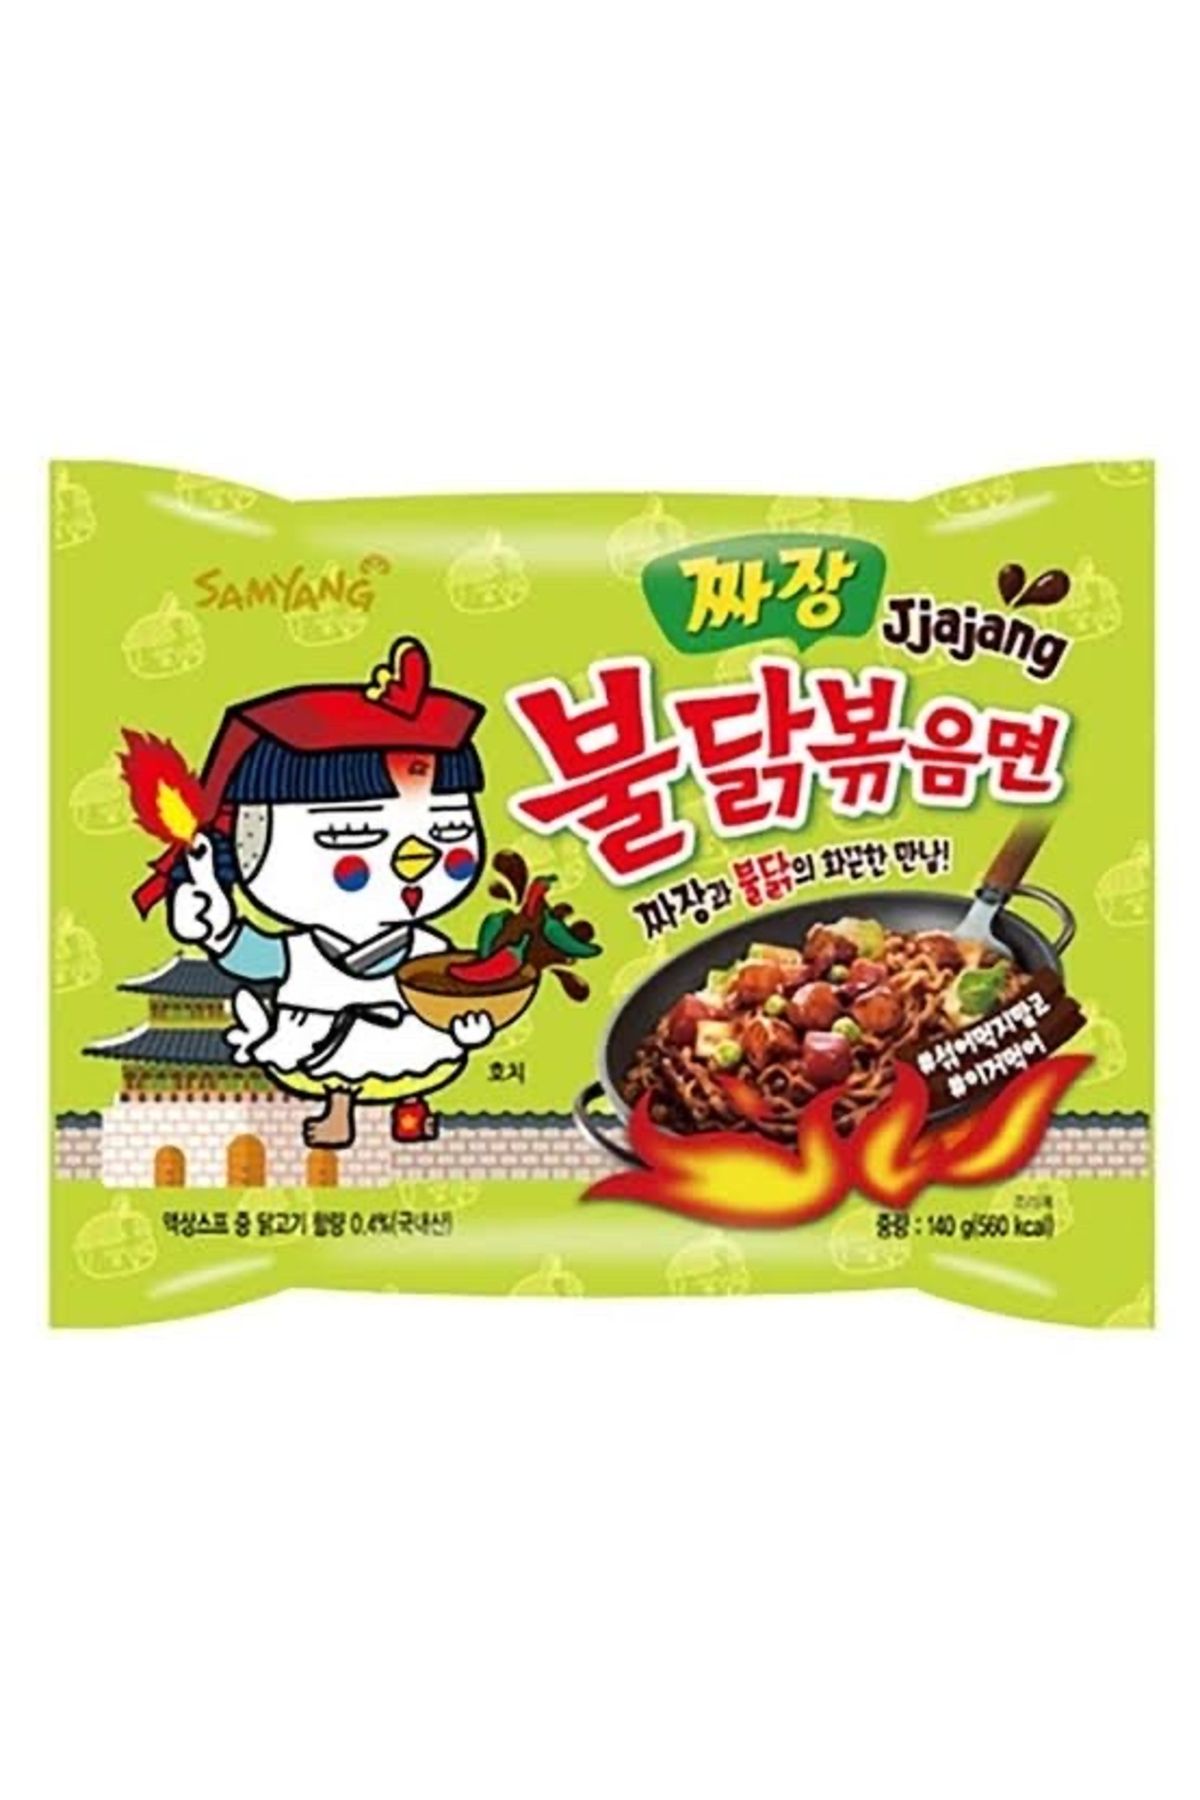 samyang Buldak Spicy Black Bean Roasted Chicken Ramen Noodle